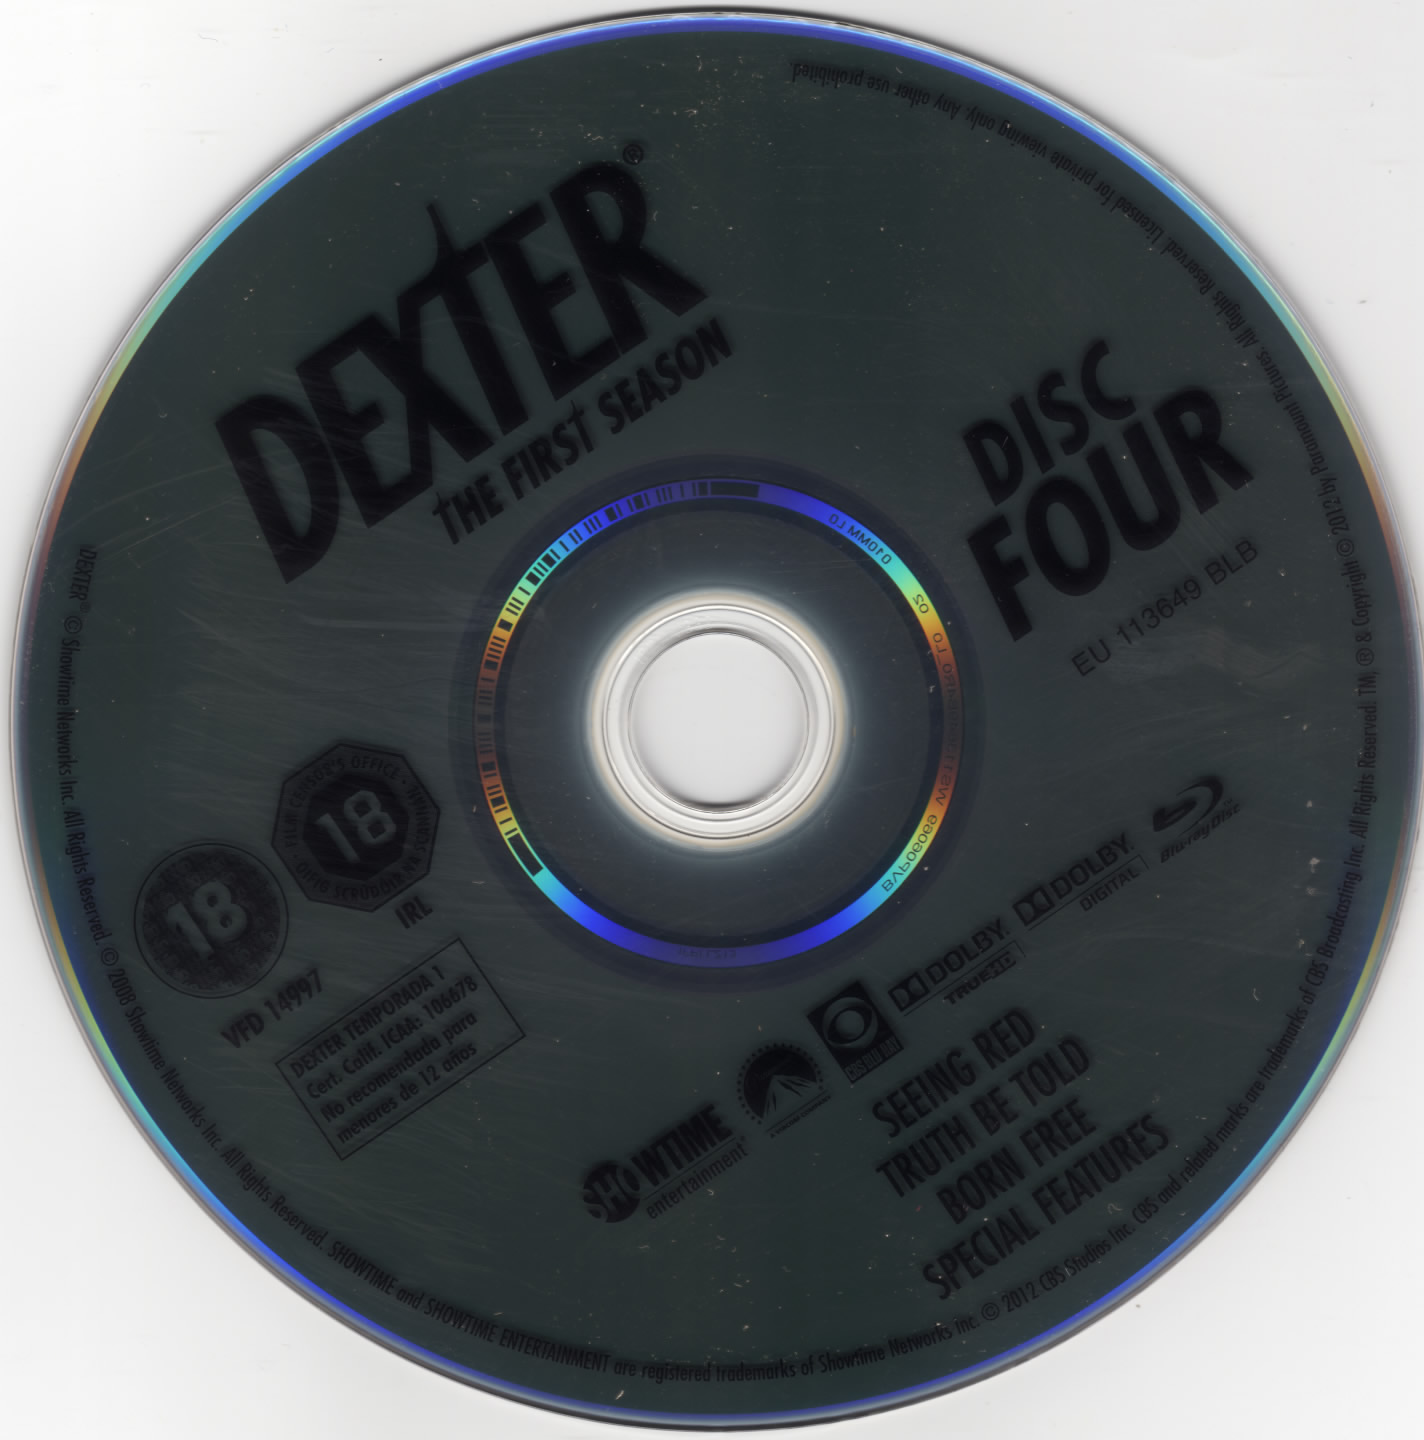 Dexter saison 1 DISC 4 (BLU-RAY)